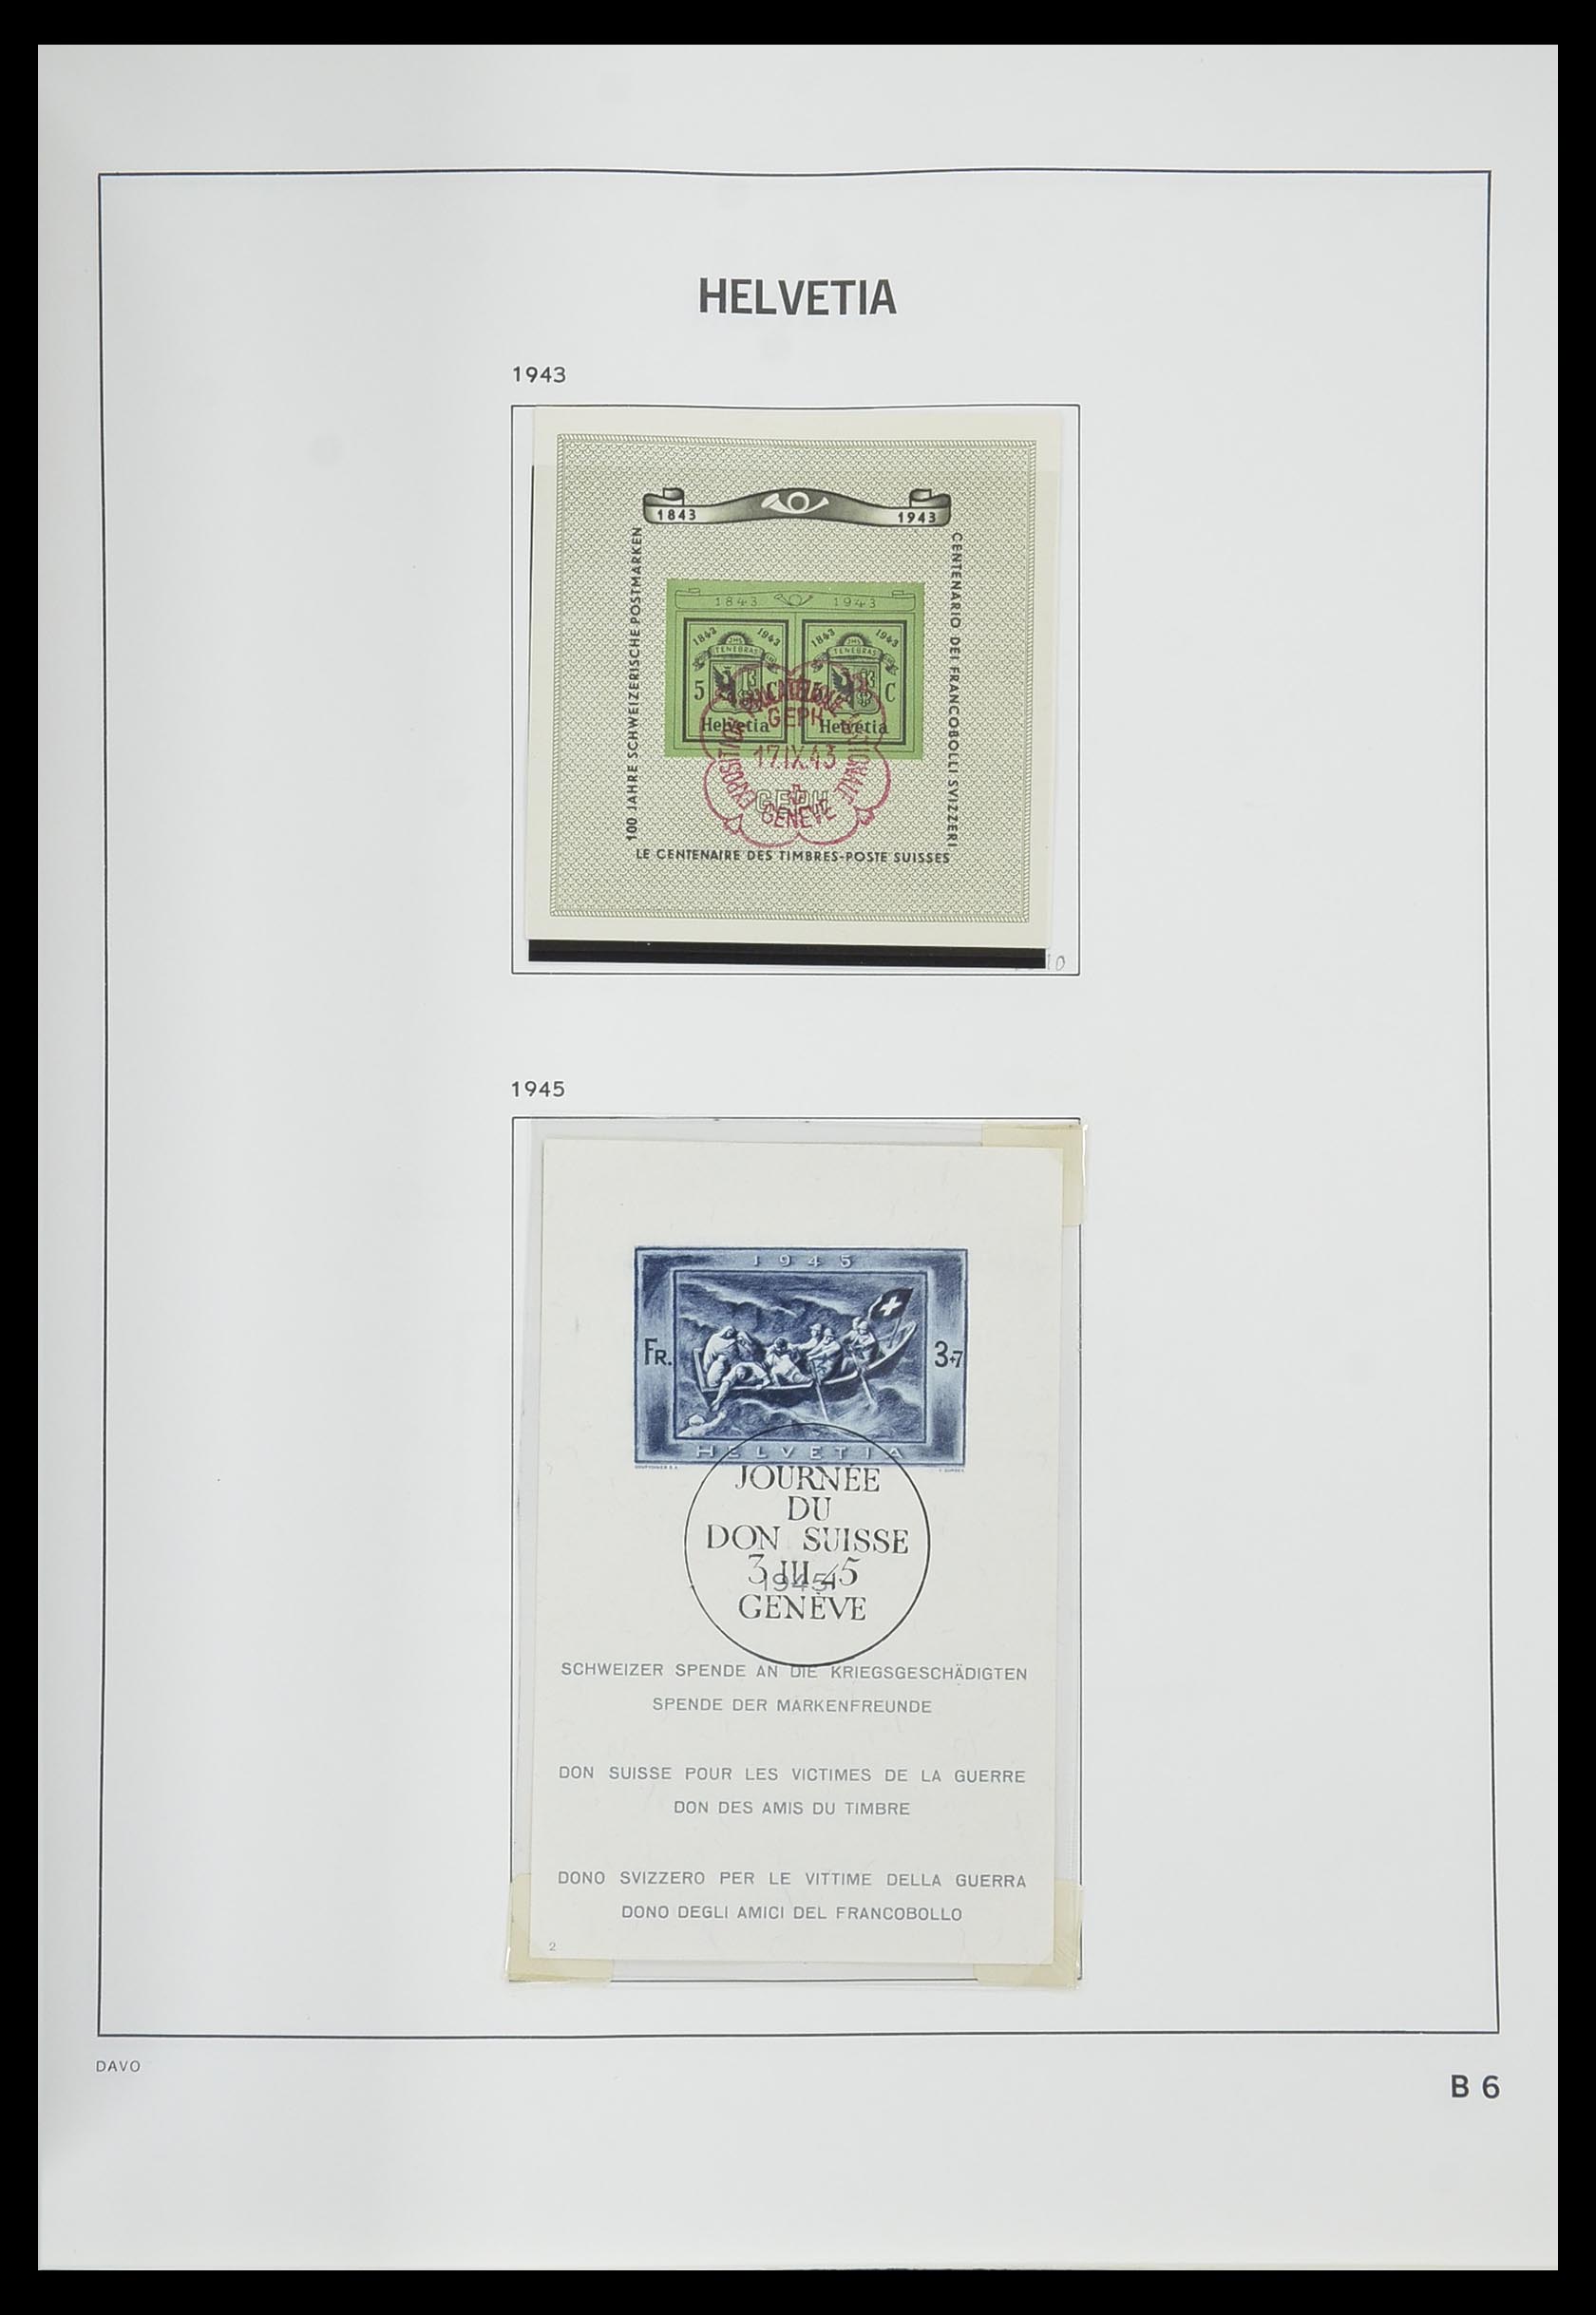 33559 139 - Stamp collection 33559 Switzerland 1850-2000.